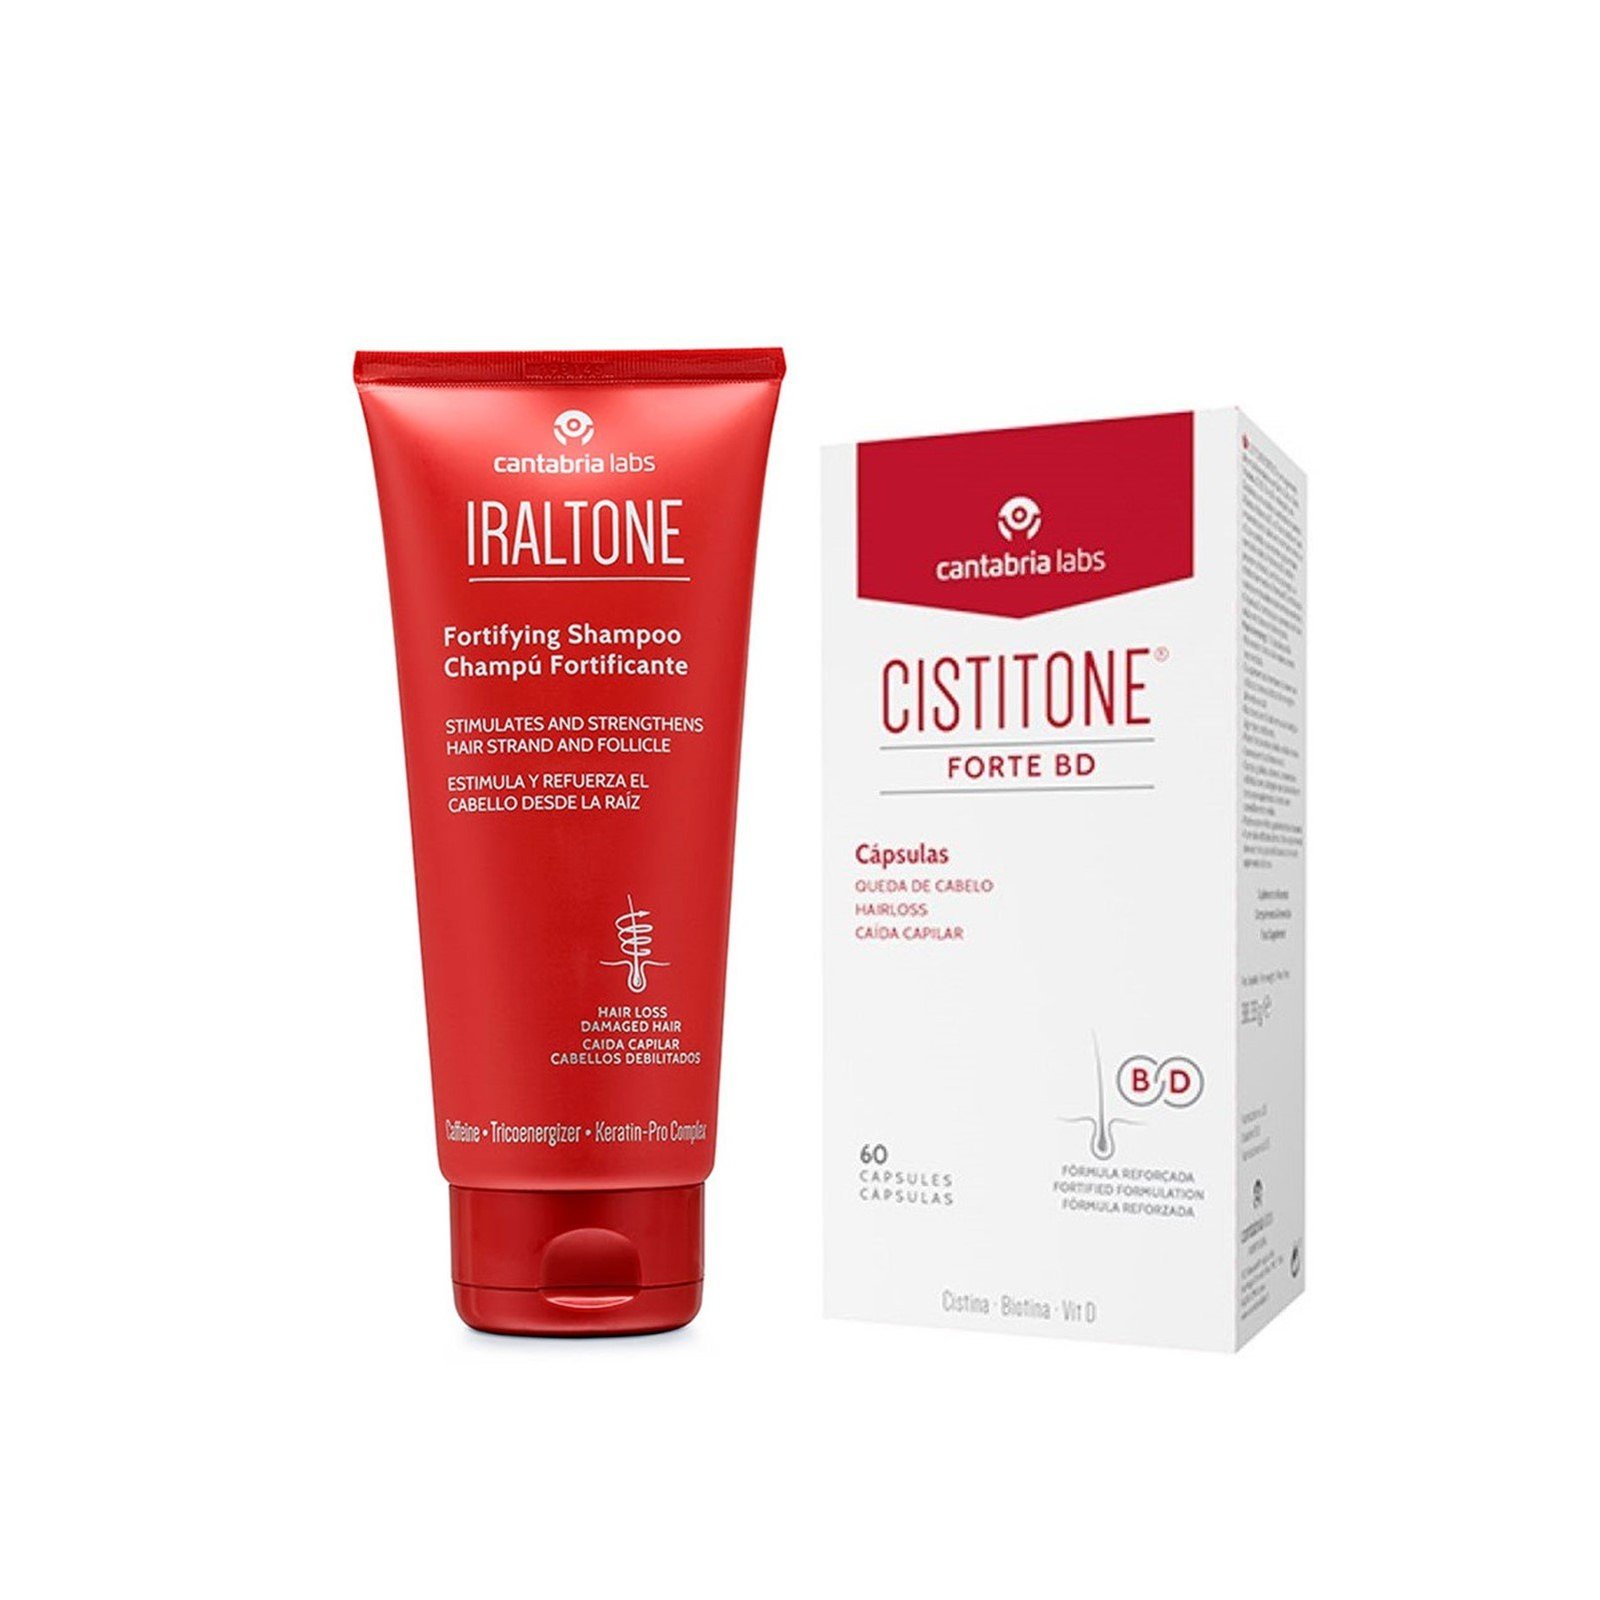 Cistitone Forte BD Hair Loss Capsules x60 + Iraltone Fortifying Shampoo 200ml